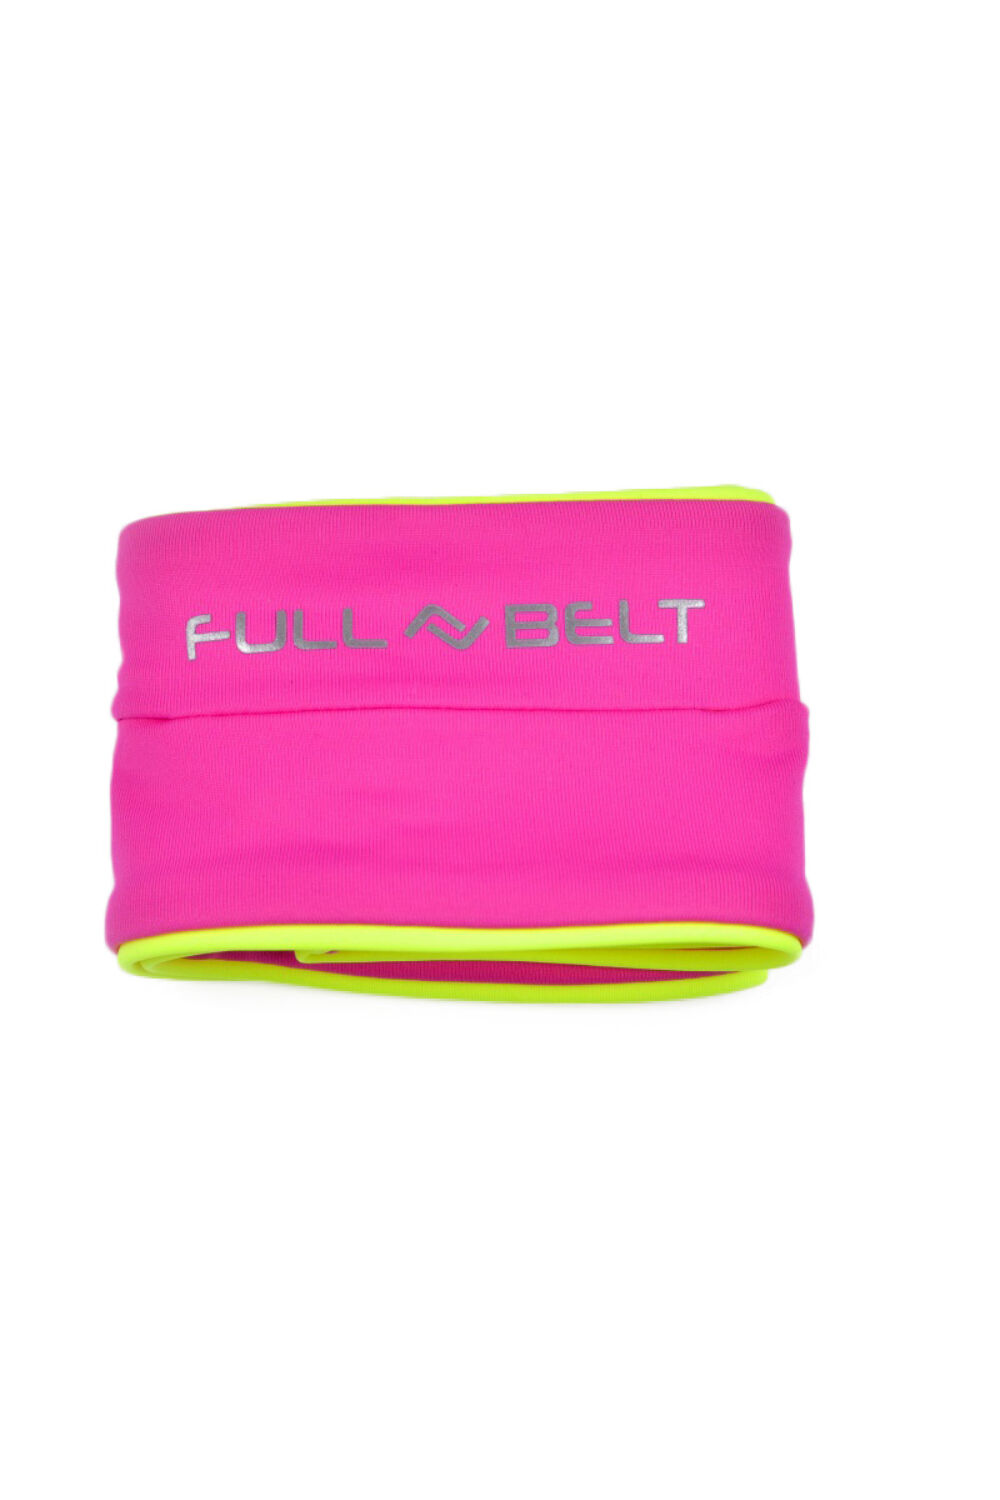 Indi-Go Full-Belt futóöv, pink-fekete